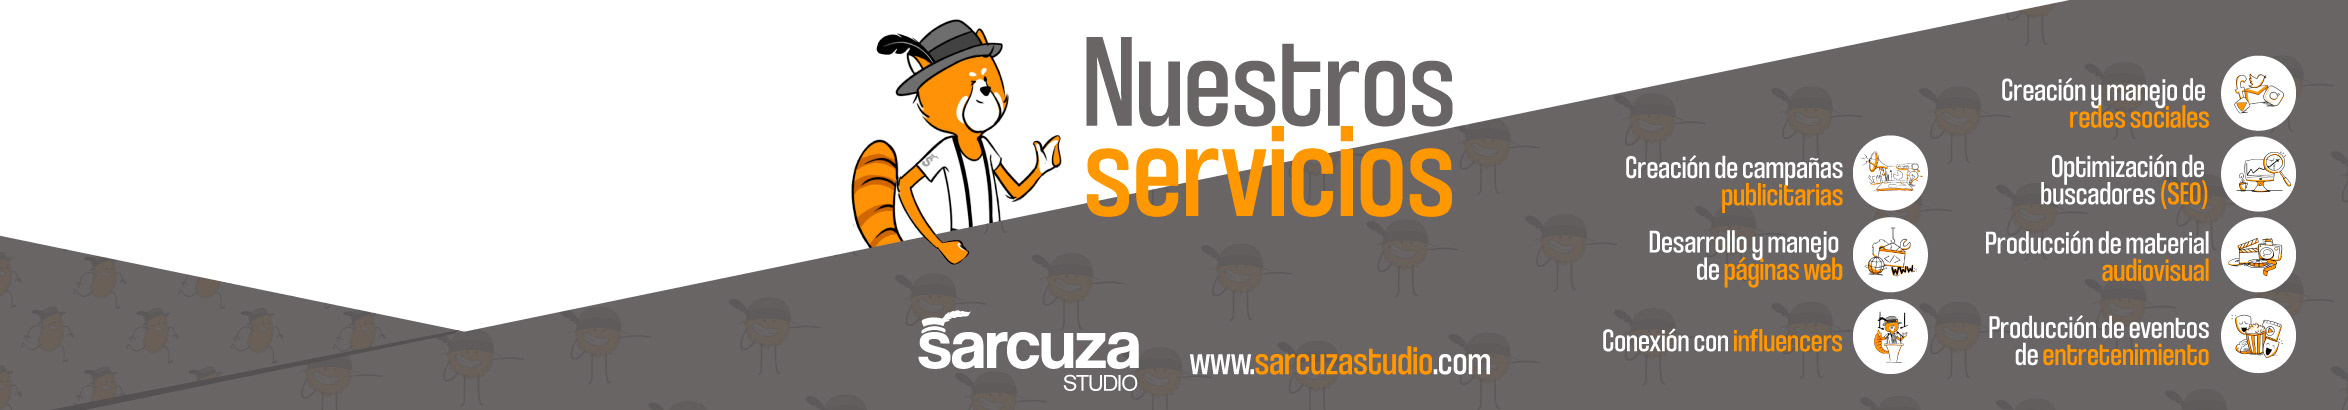 Sarcuza Studio's profile banner